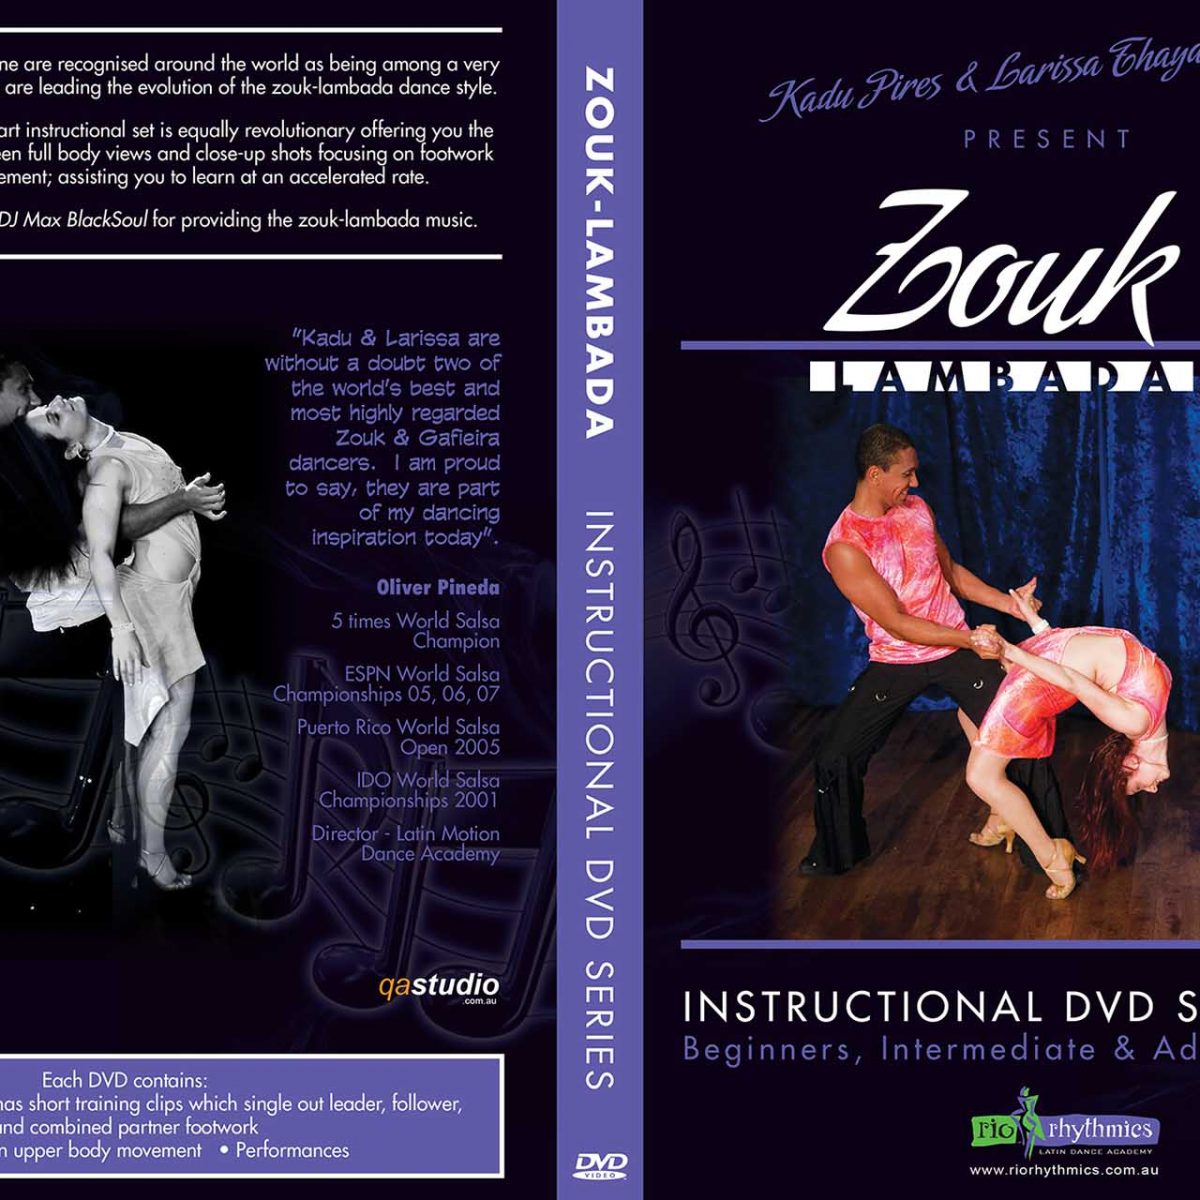 DVD Covers (Box Set)